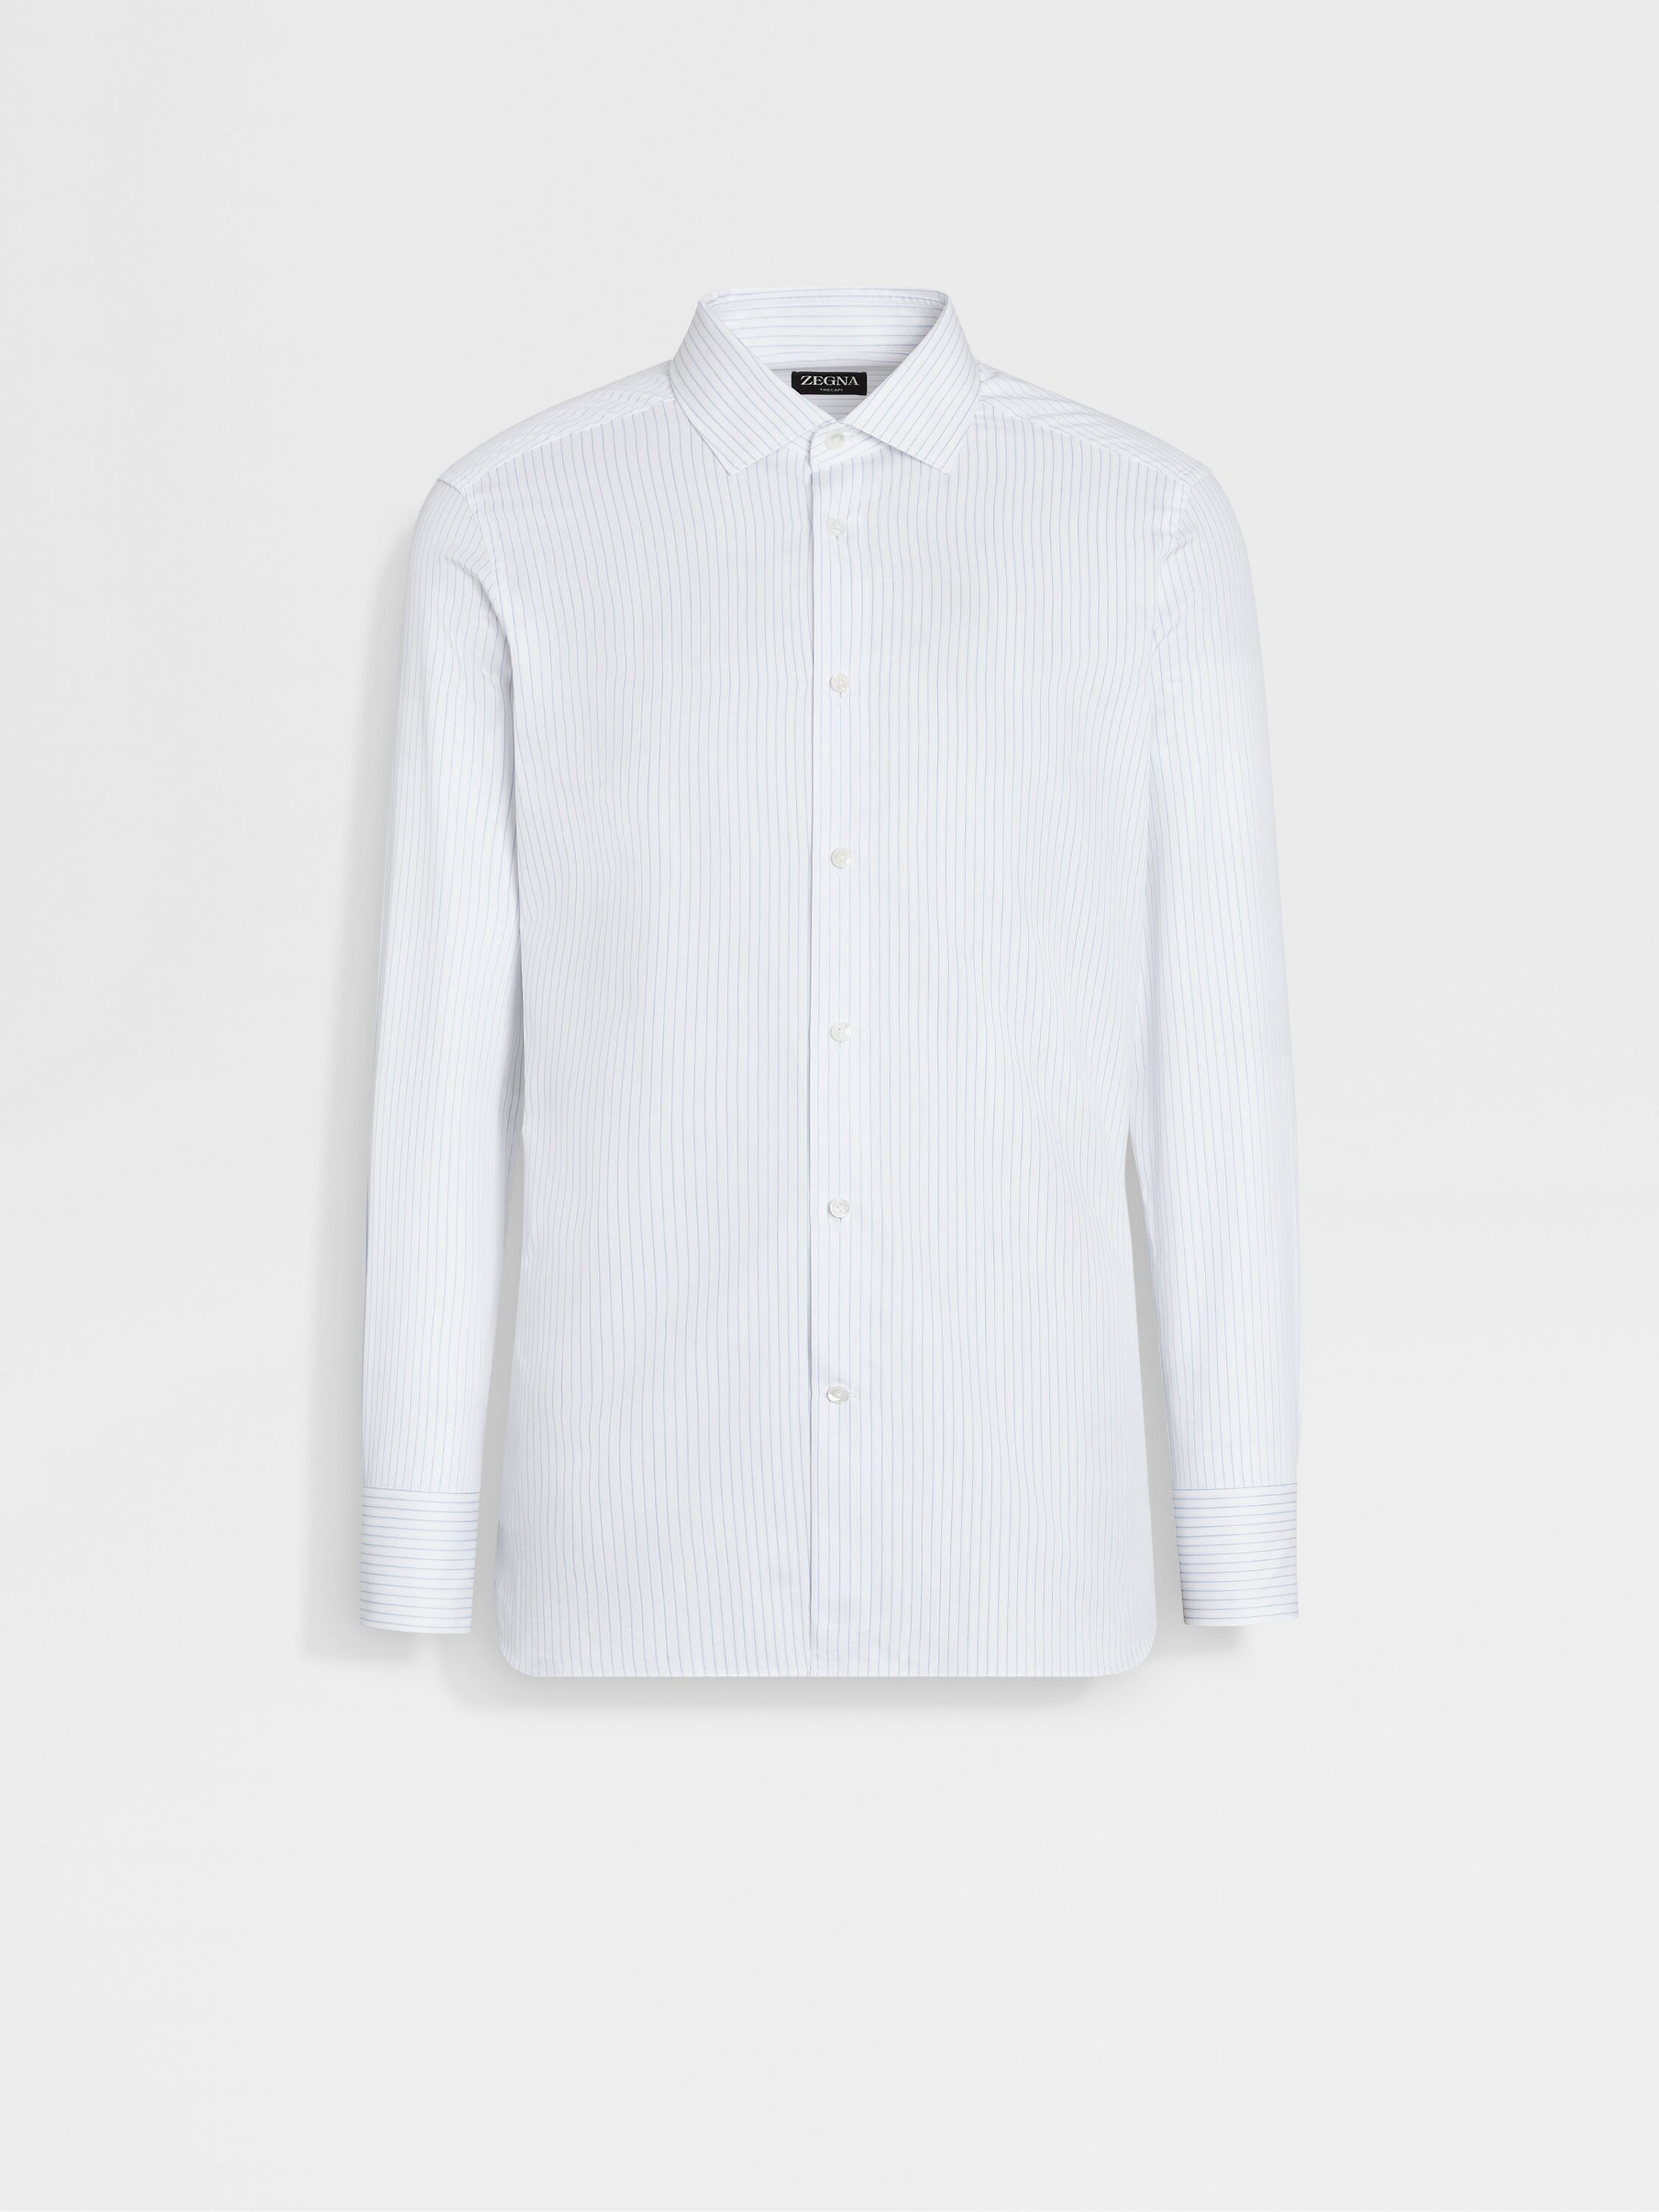 White and Light Blue Structured Striped Trecapi Cotton Shirt